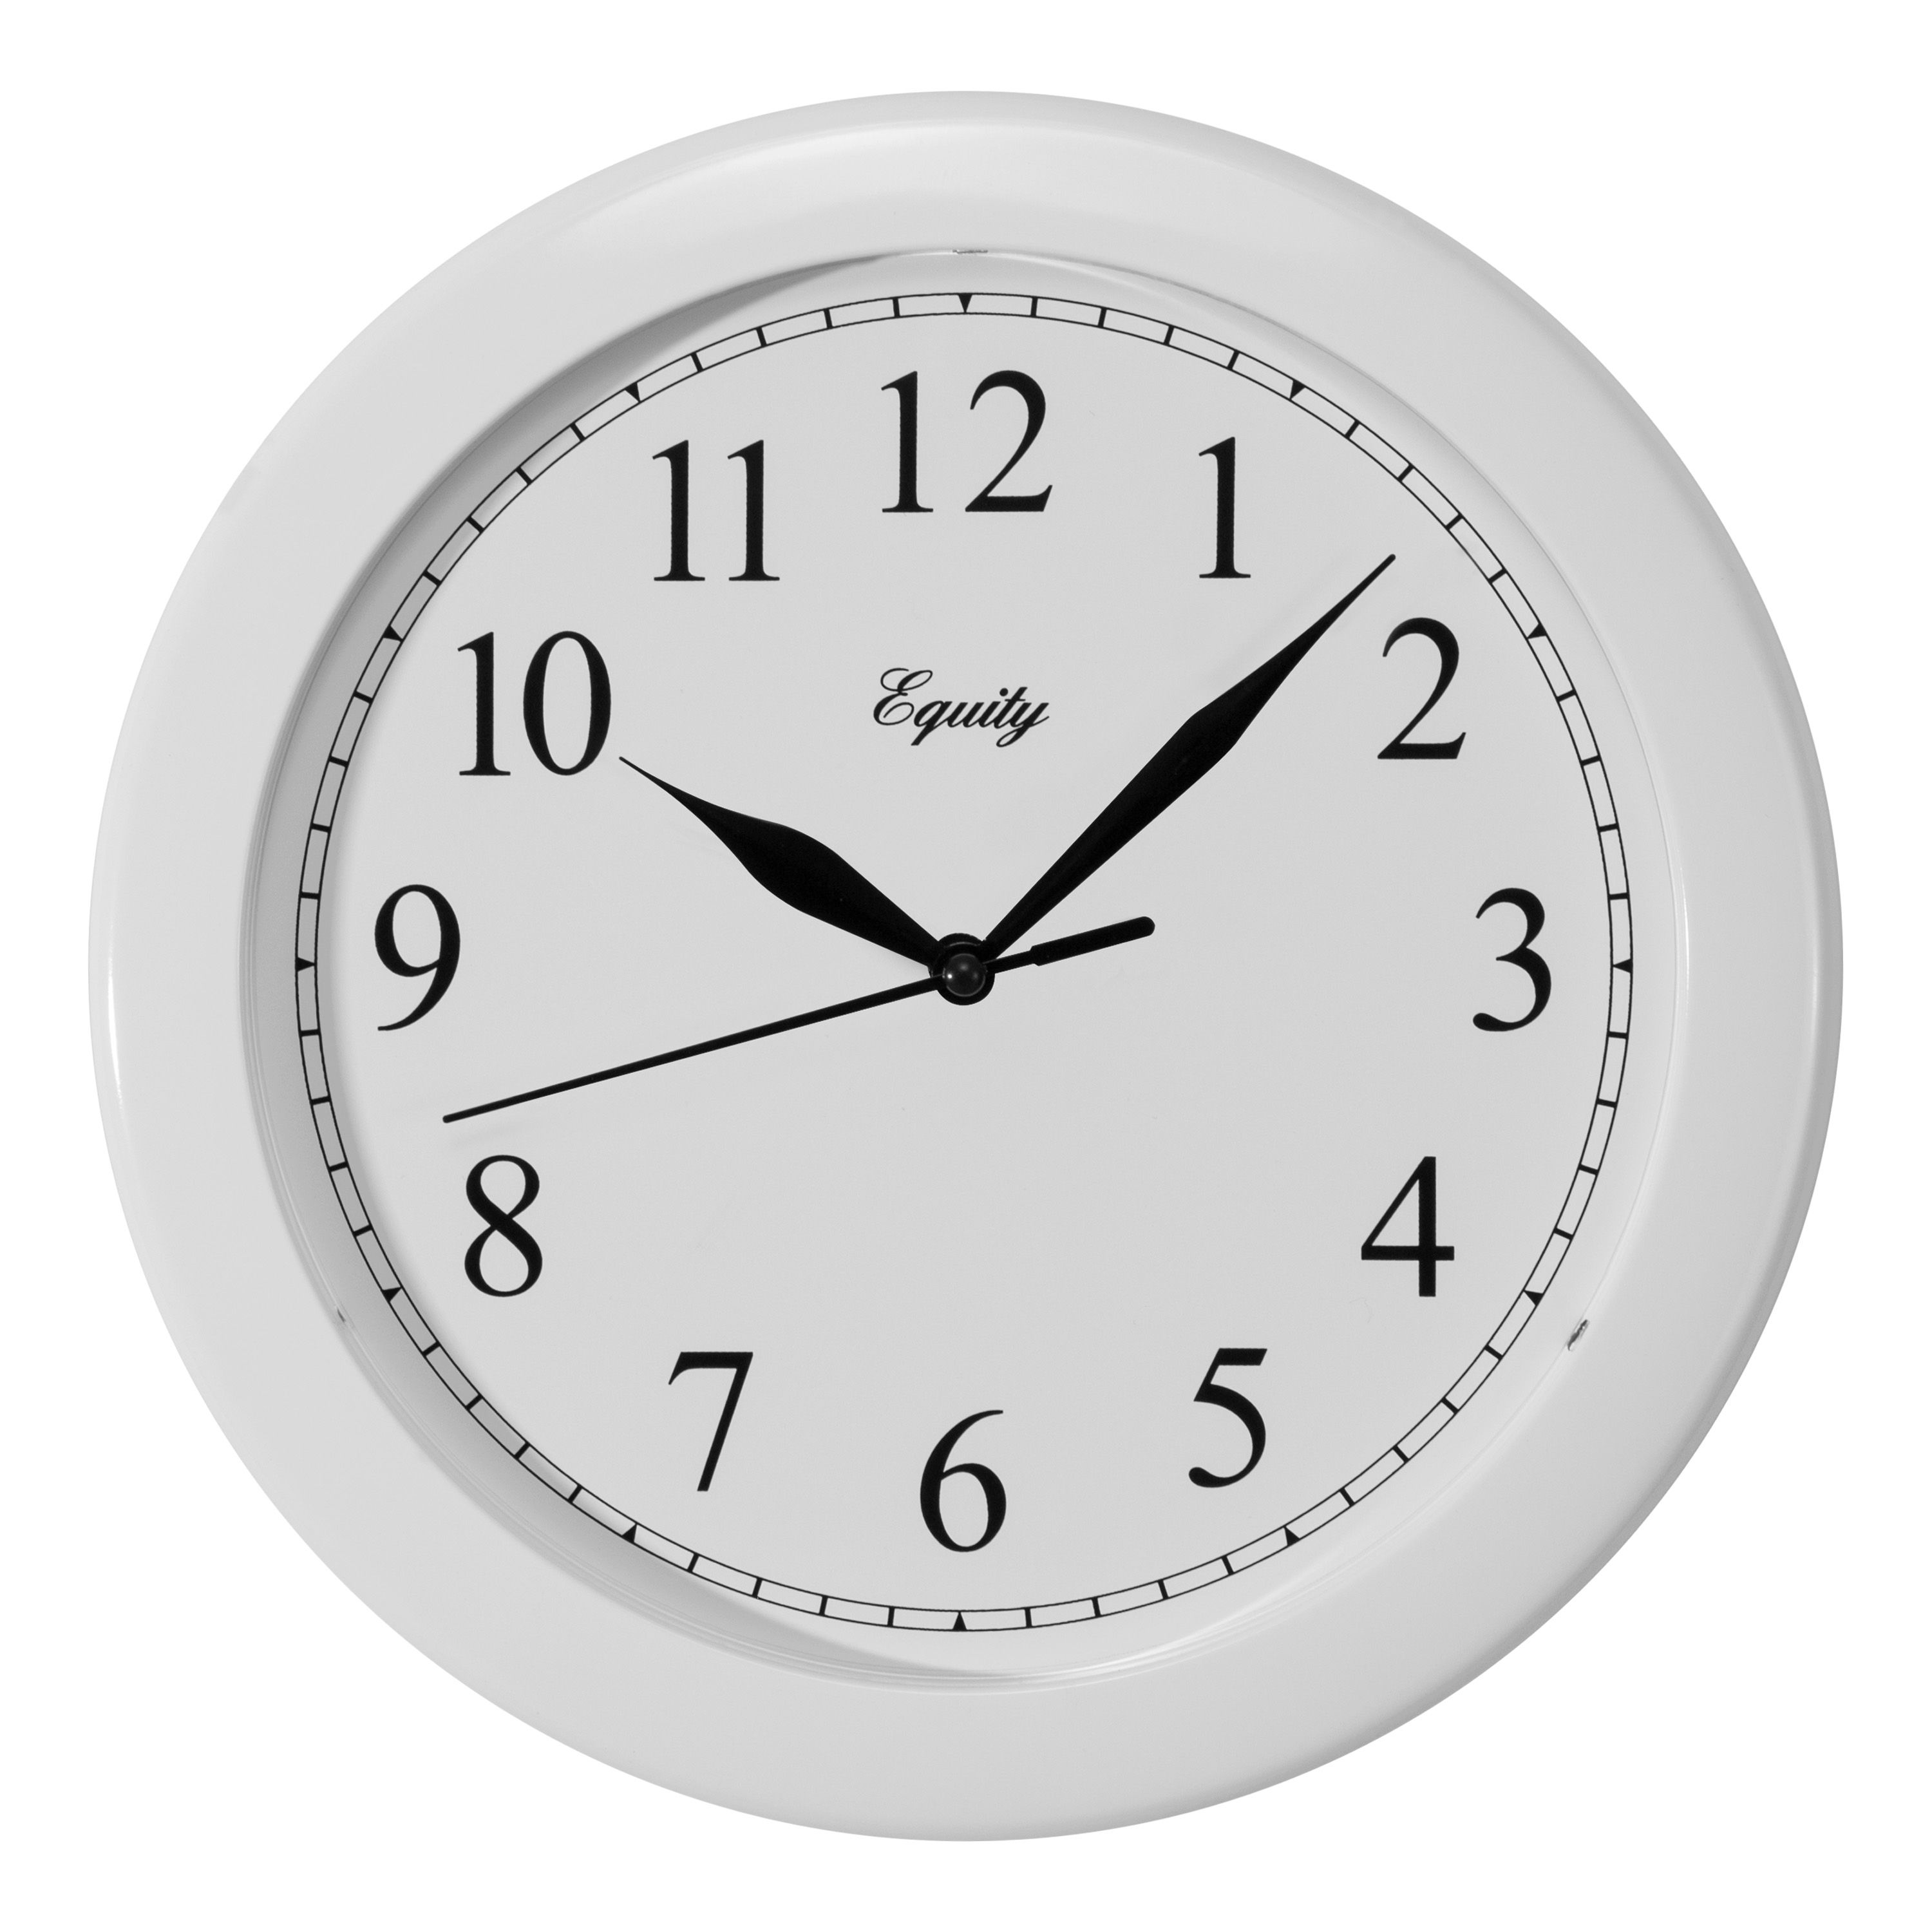 Picture of La Crosse Technology Ltd 25201 10 in. White Plastic Wall Clock